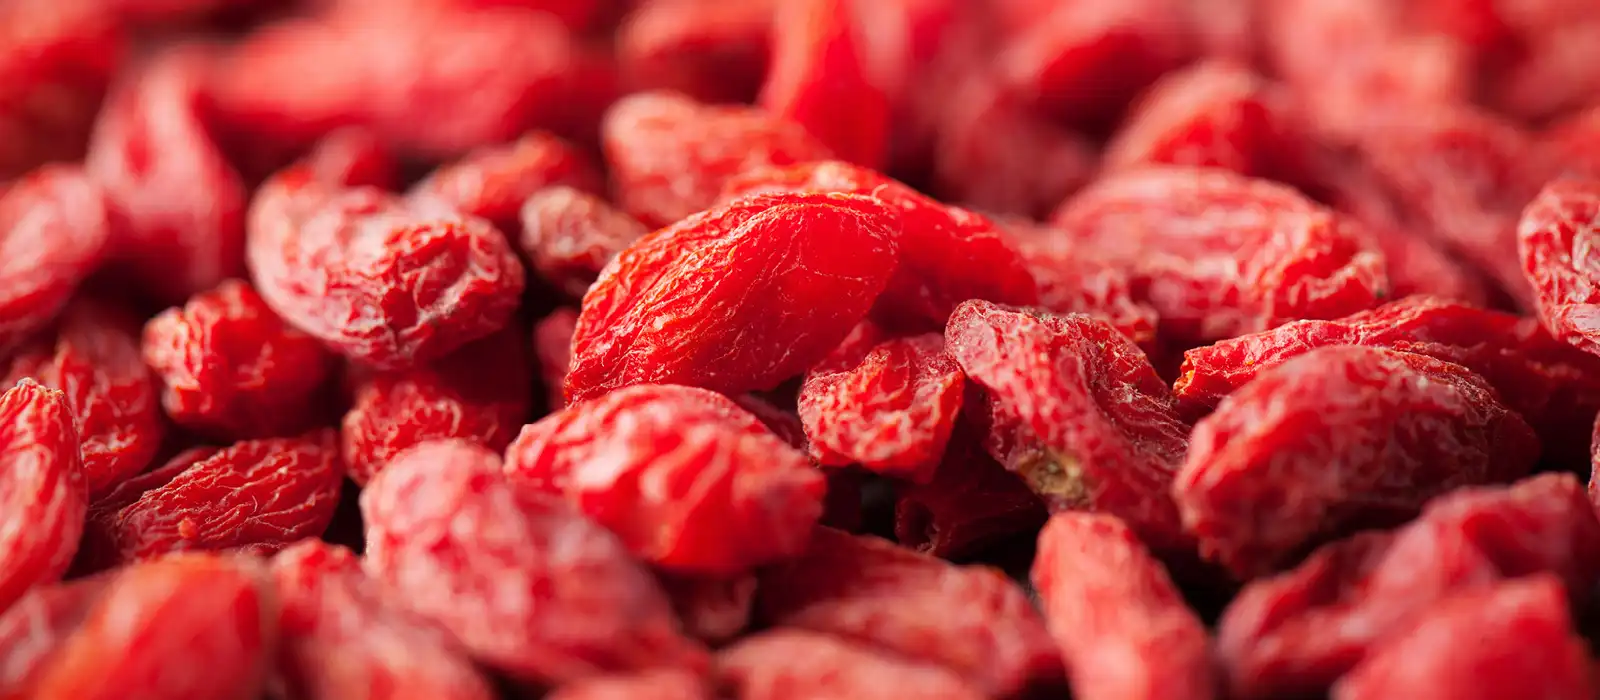 Vibrant red goji berries